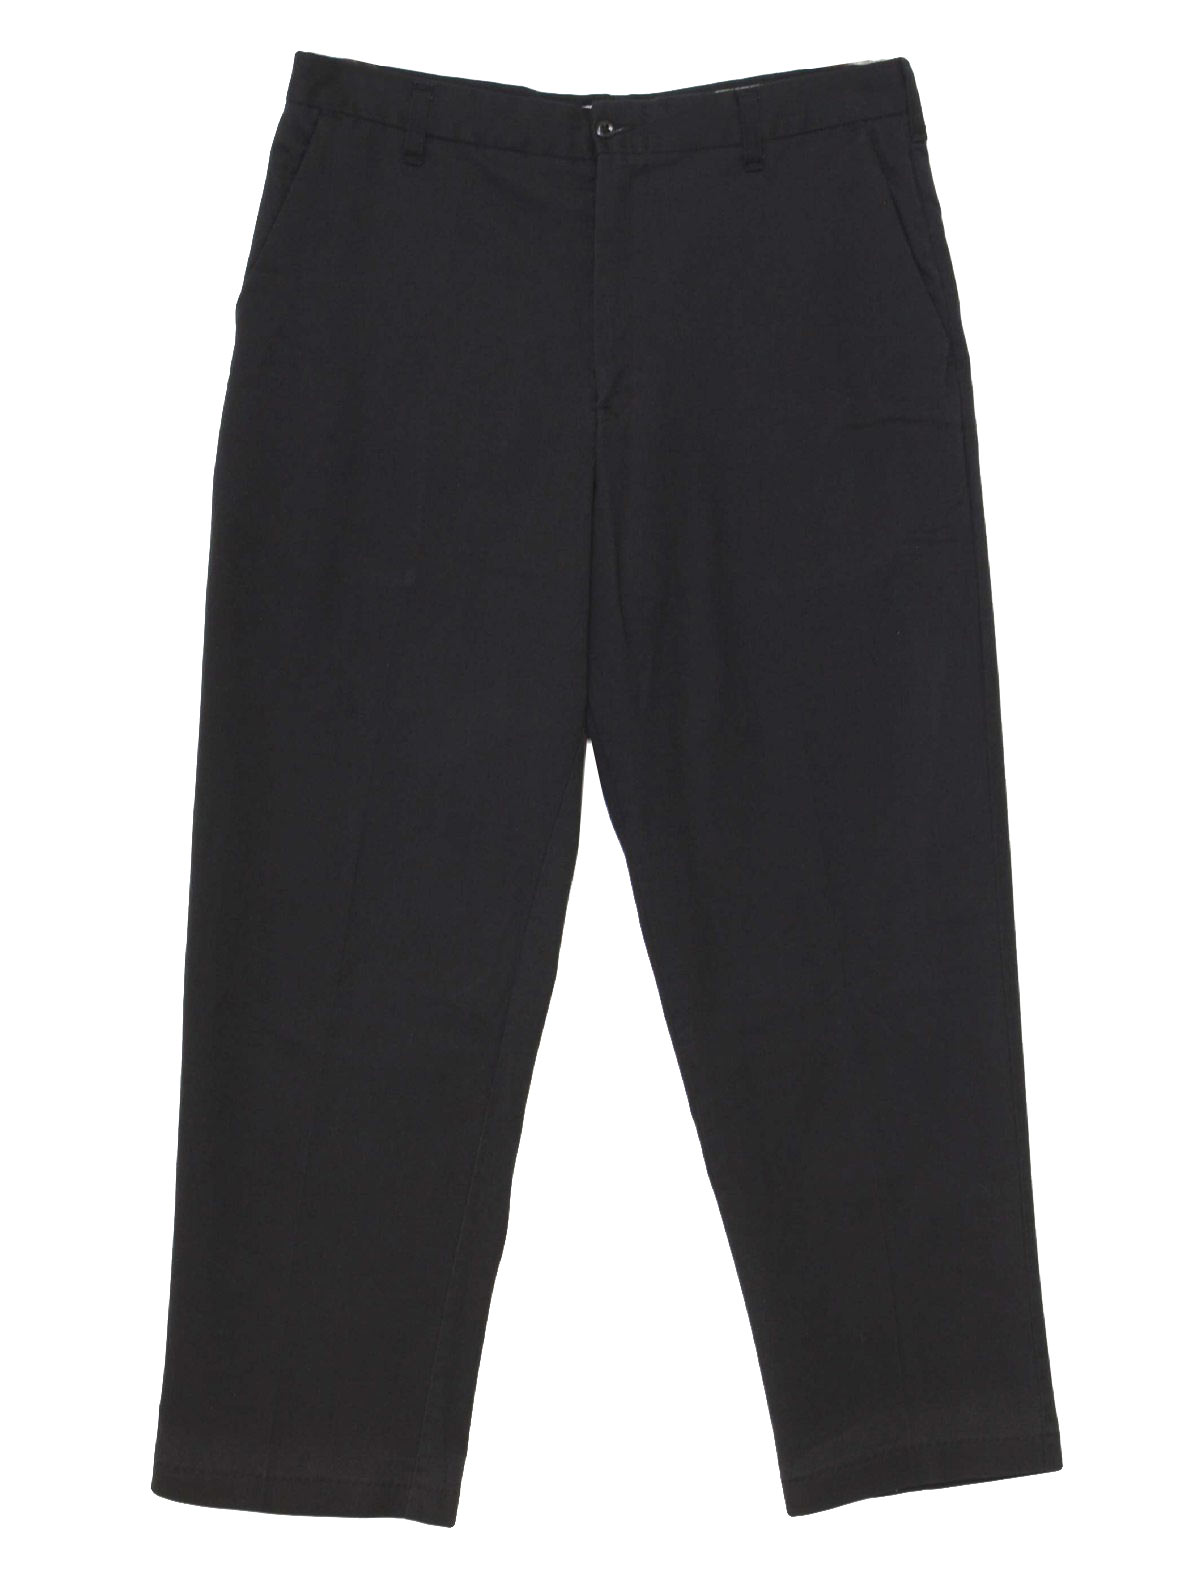 1990's Retro Pants: 90s -Cintas- Mens black cotton polyester blend ...